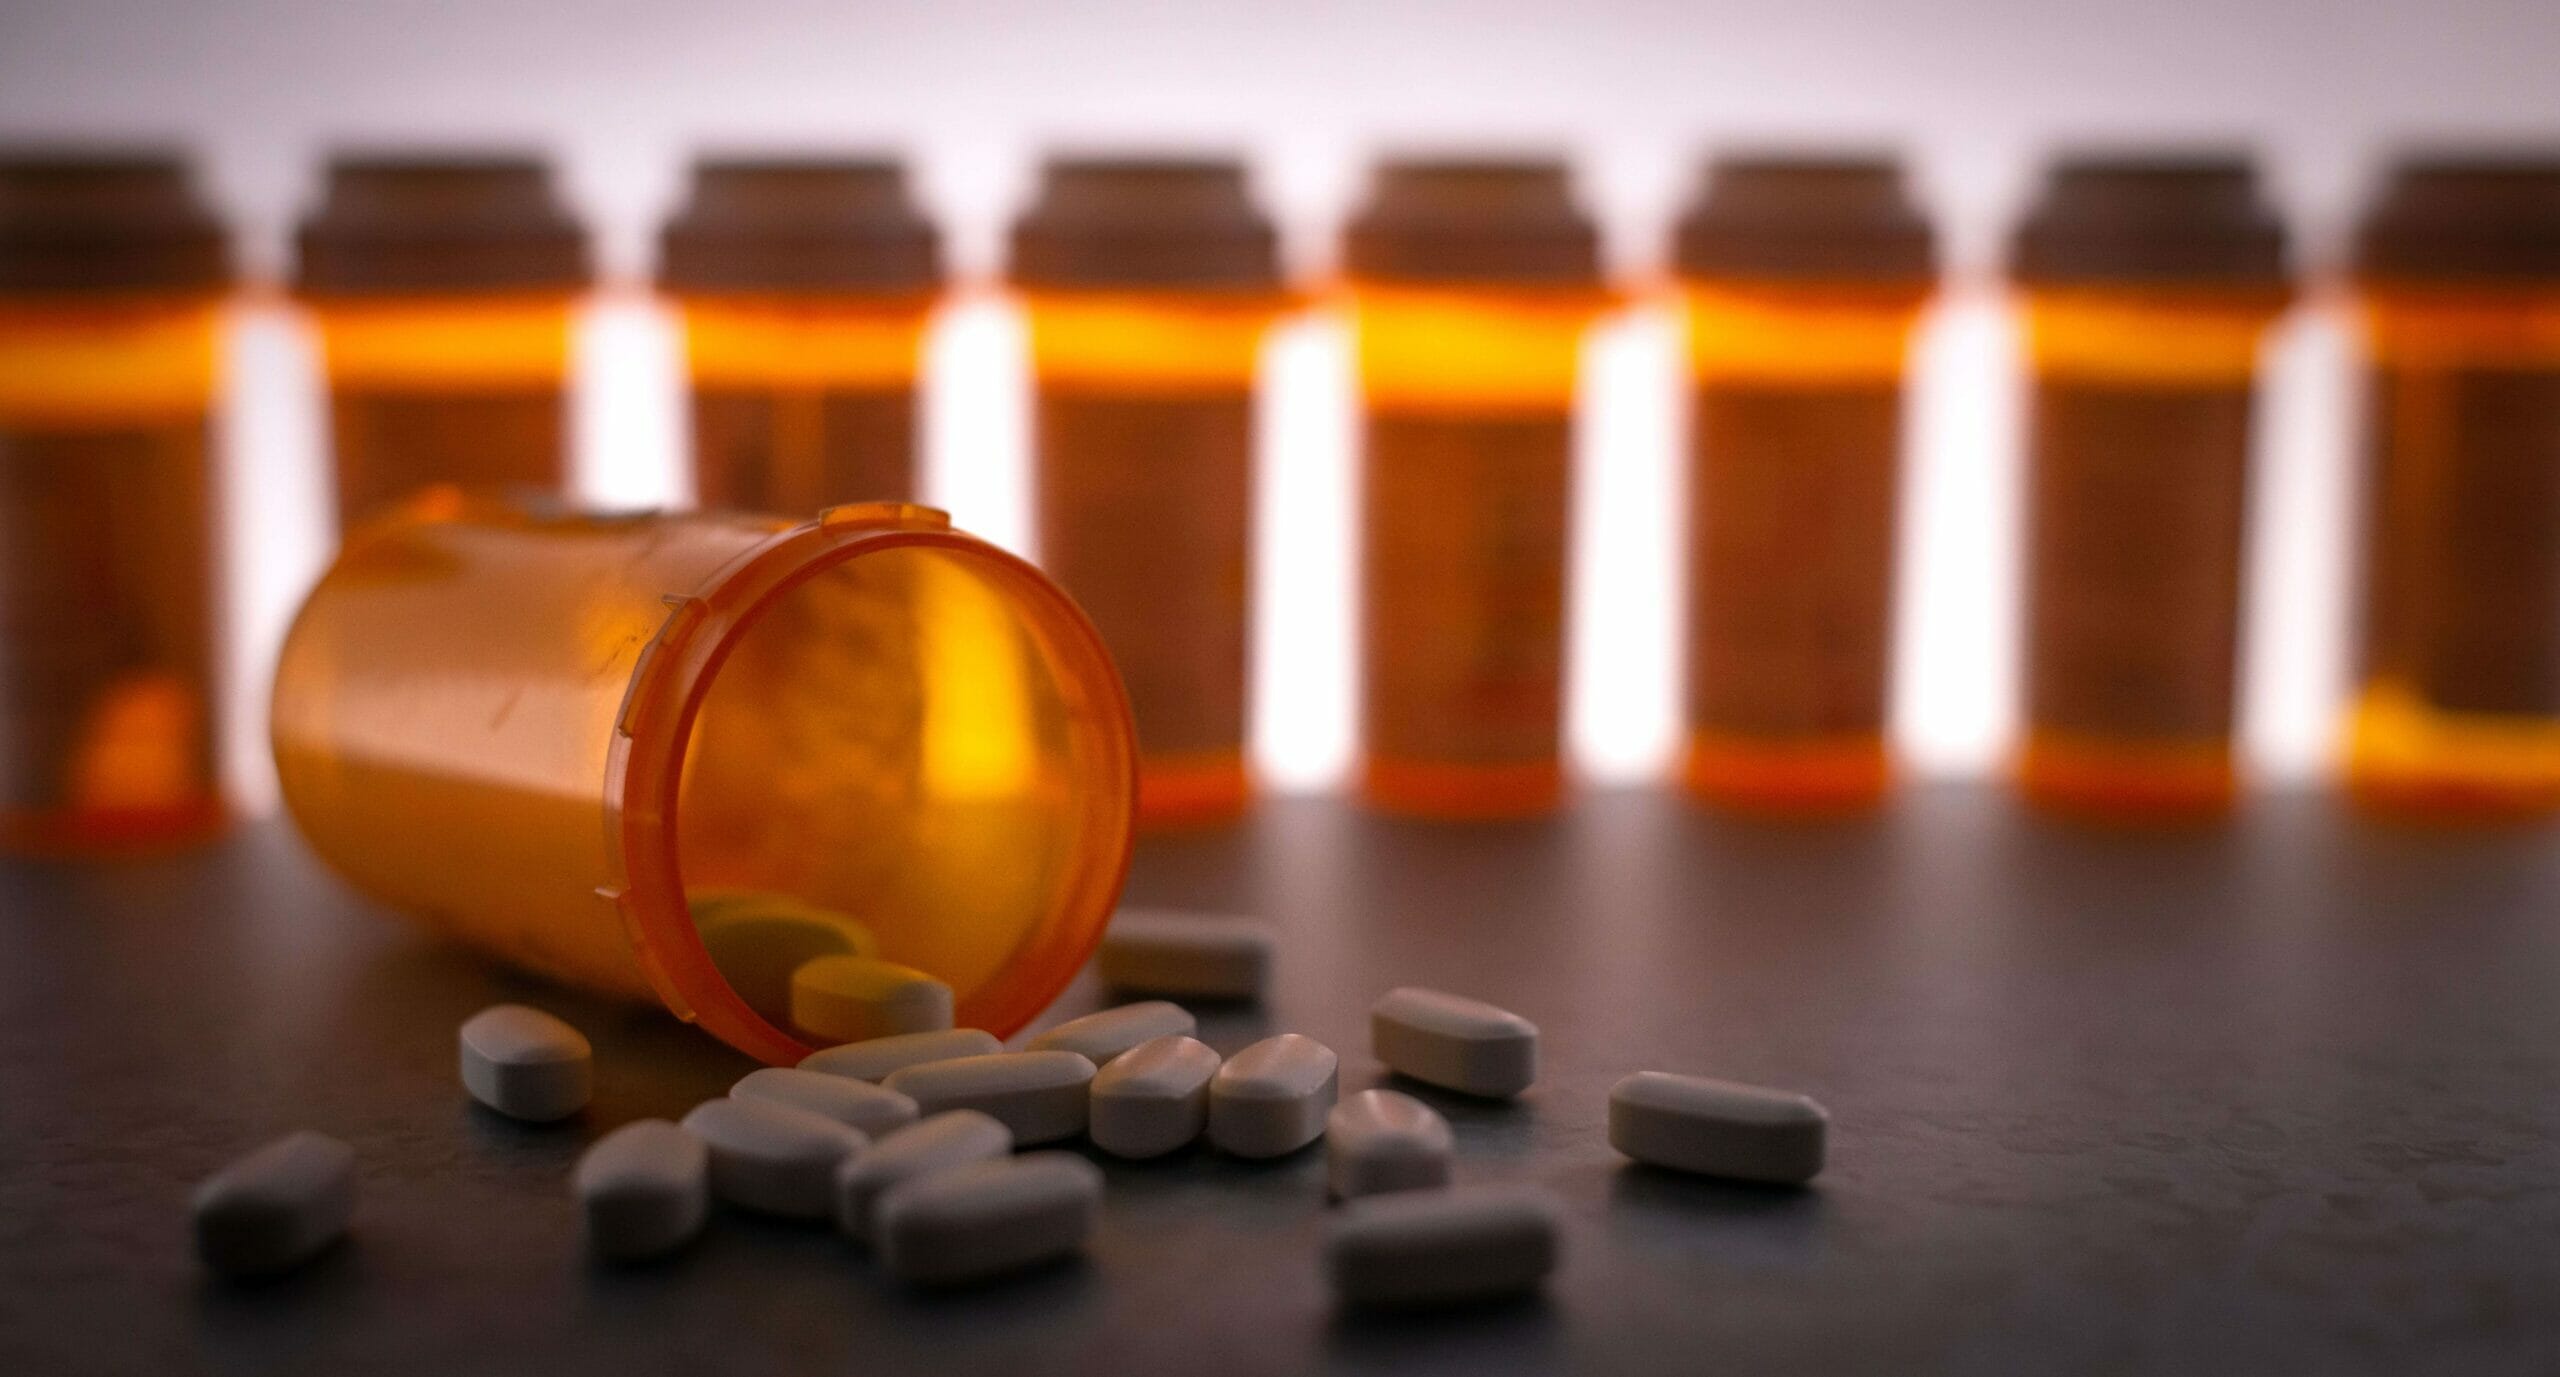 bottles of prescription opioids